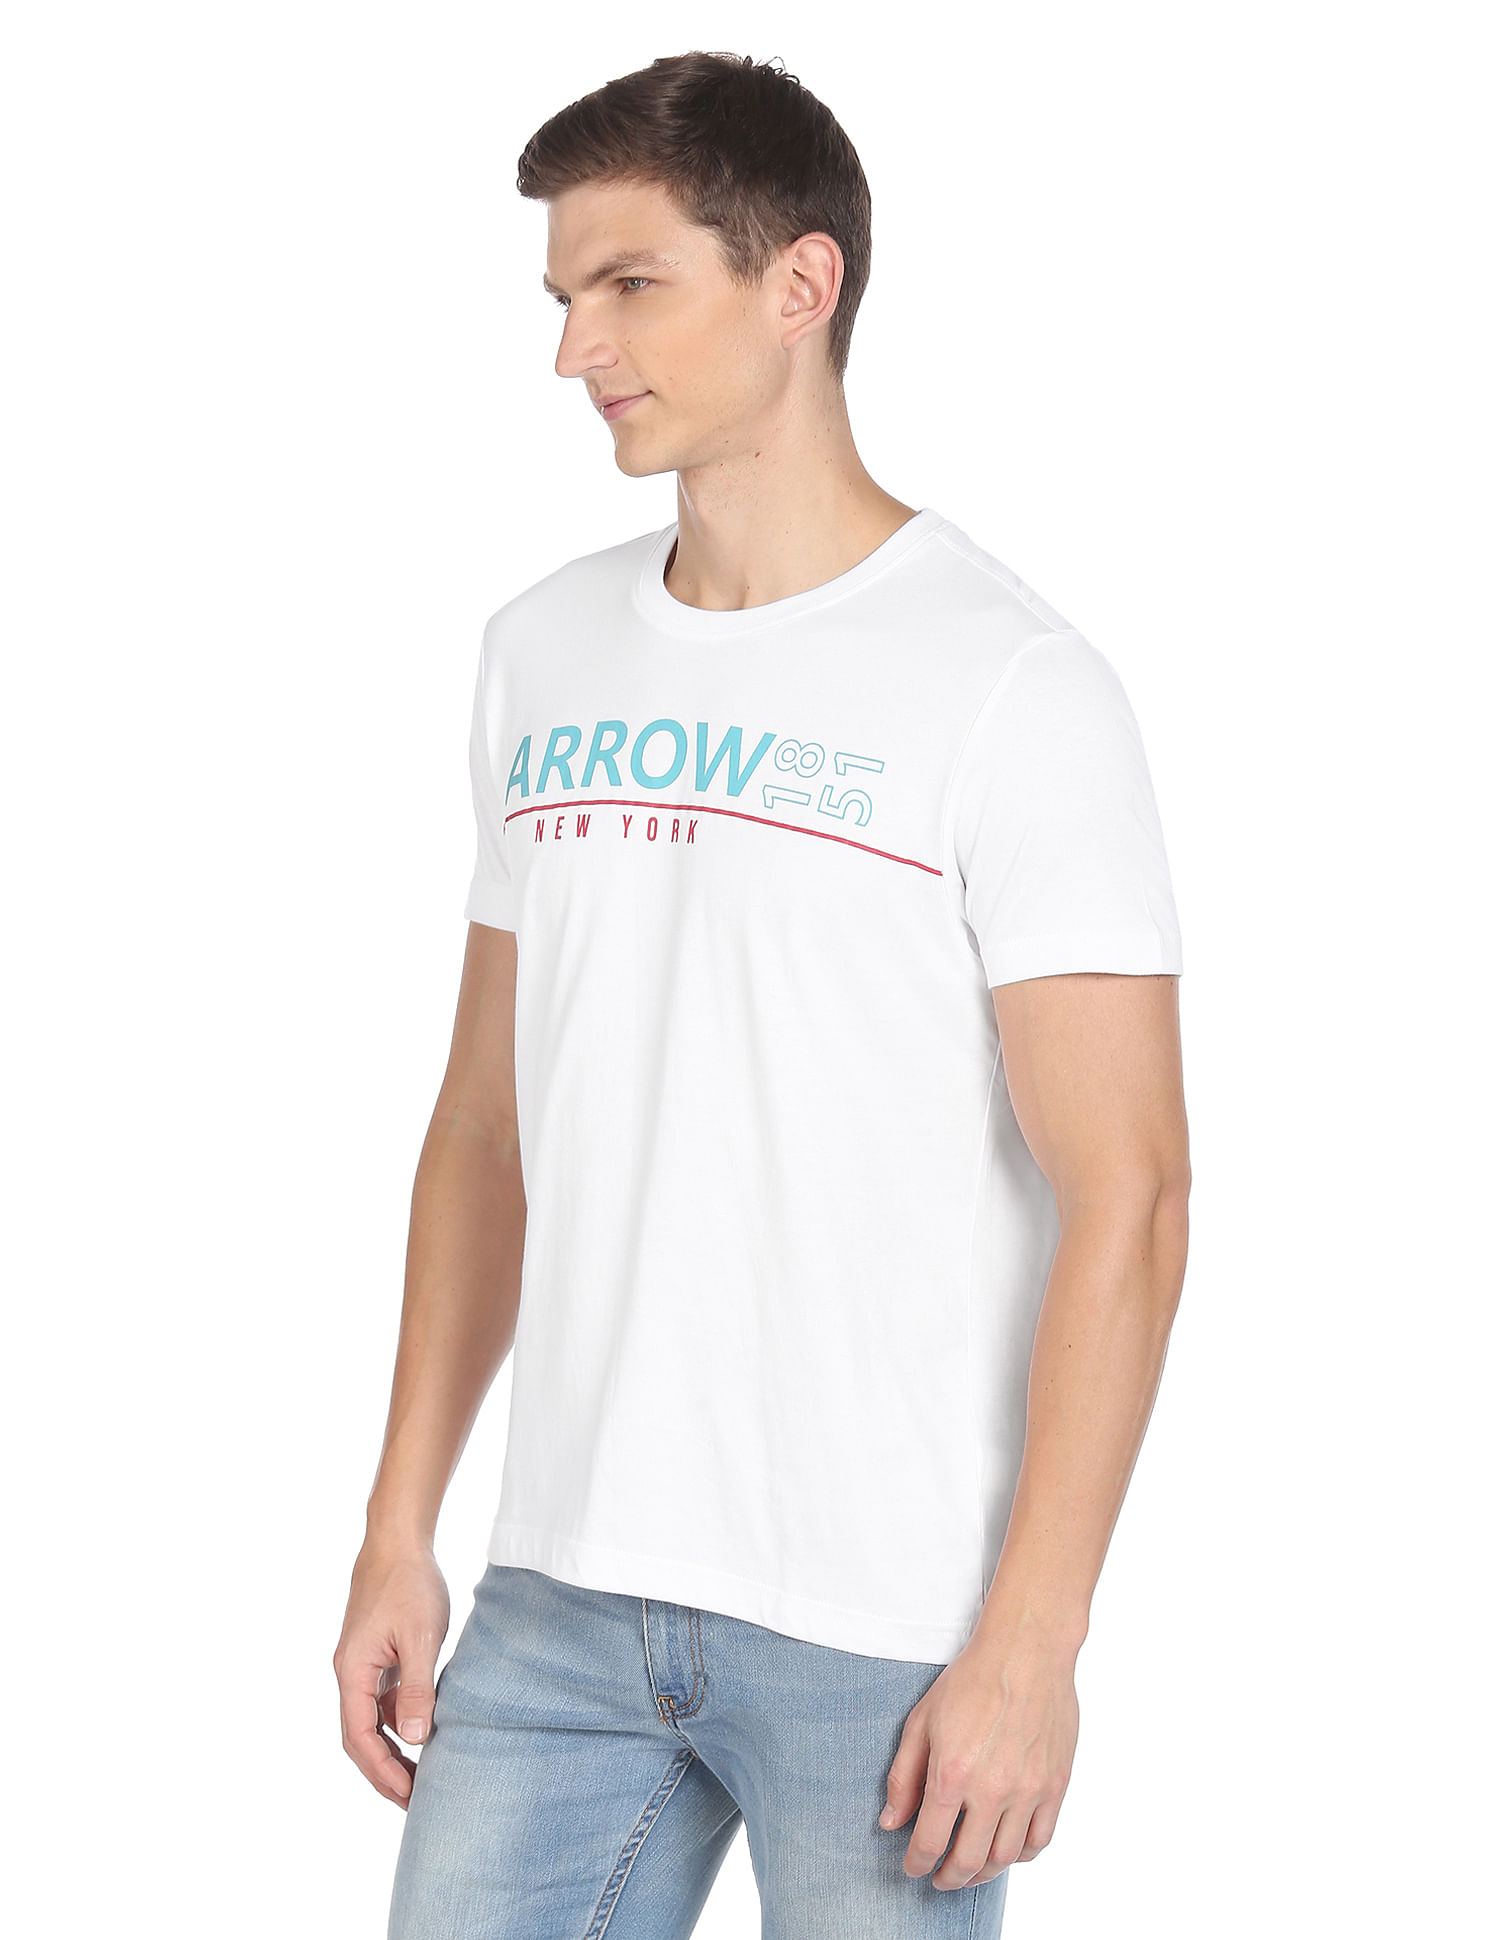 Buy Arrow Sports Pure Brand White T-Shirt Cotton Print Men